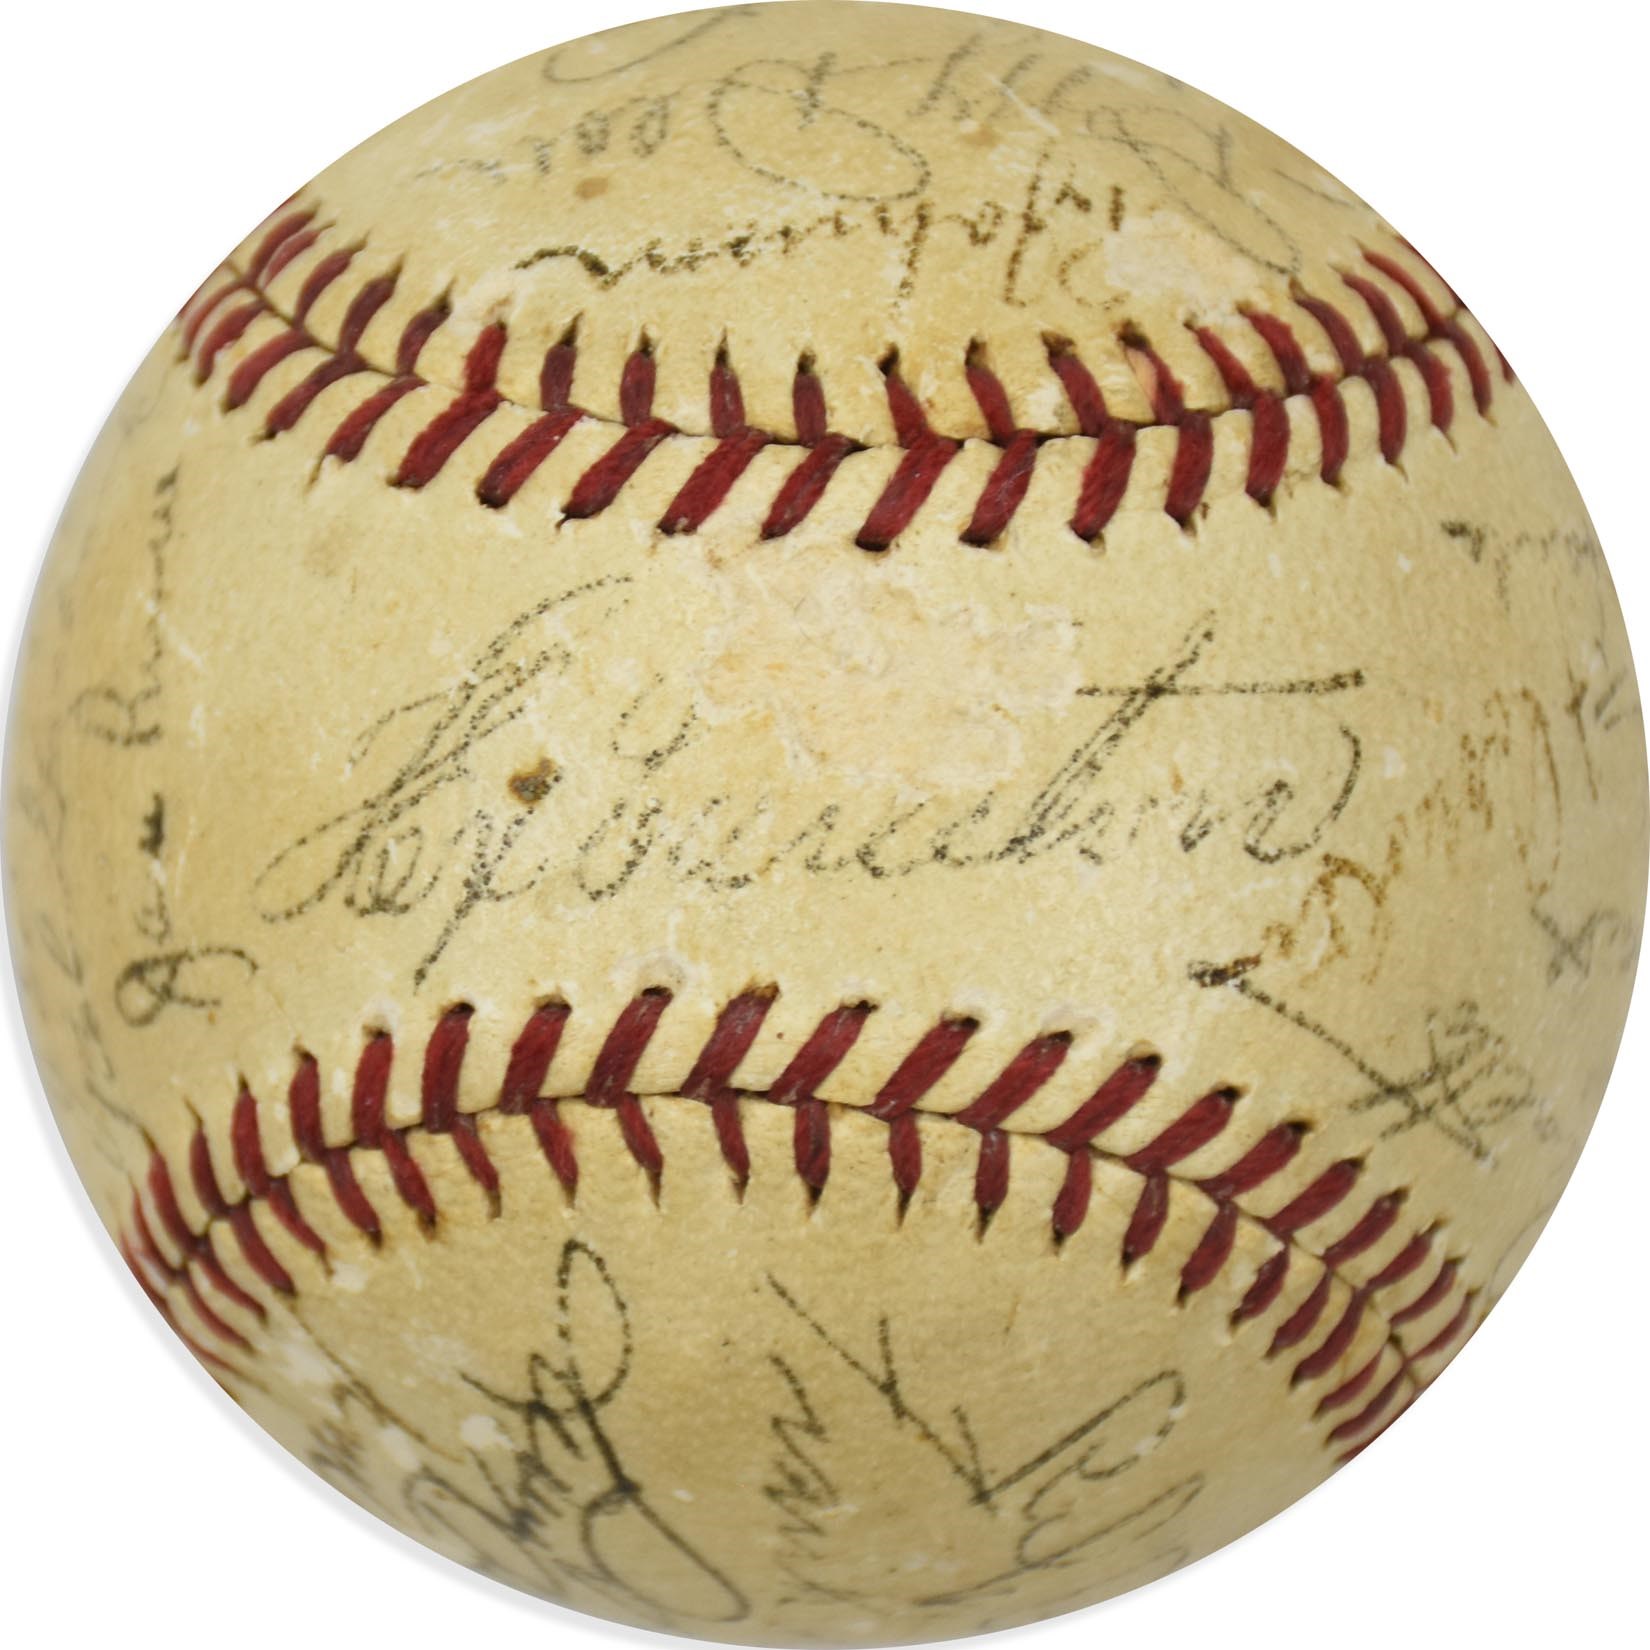 Baseball Autographs - 1938 Chicago Cubs National League Champions Team-Signed Baseball (PSA)